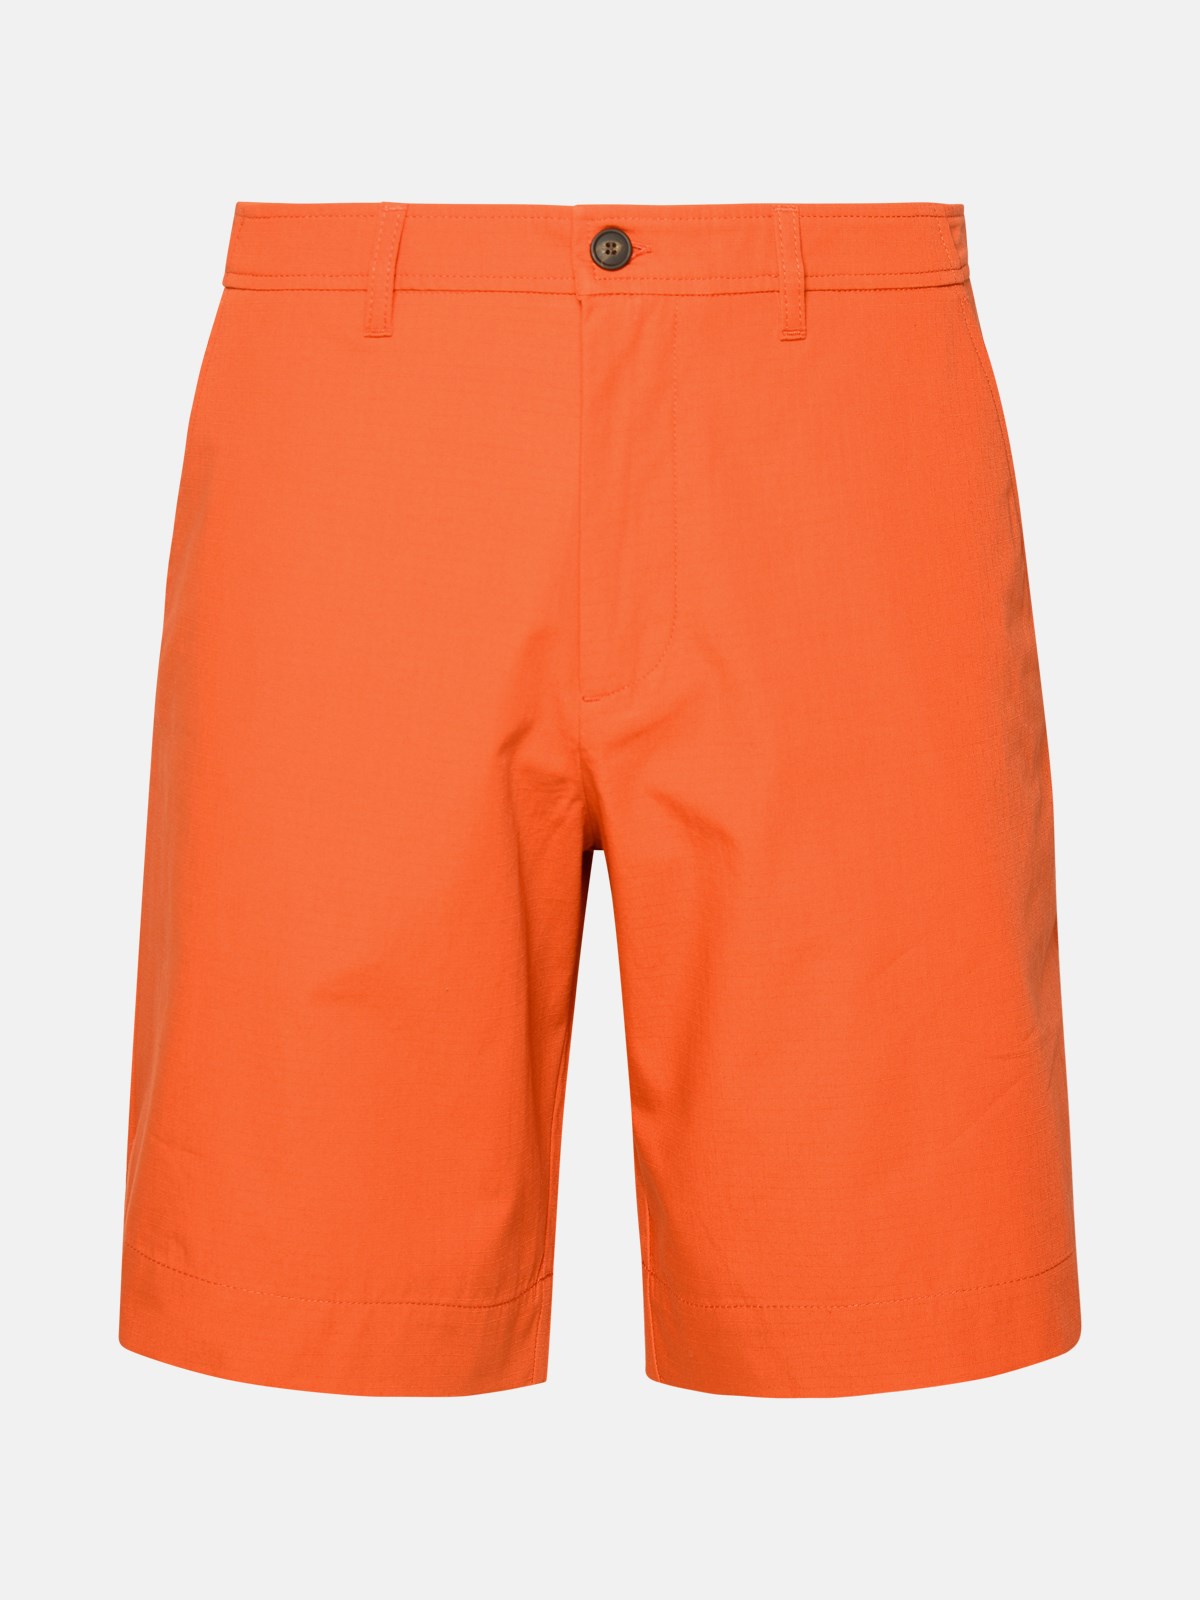 Maison Kitsuné 'board' Orange Cotton Bermuda Shorts